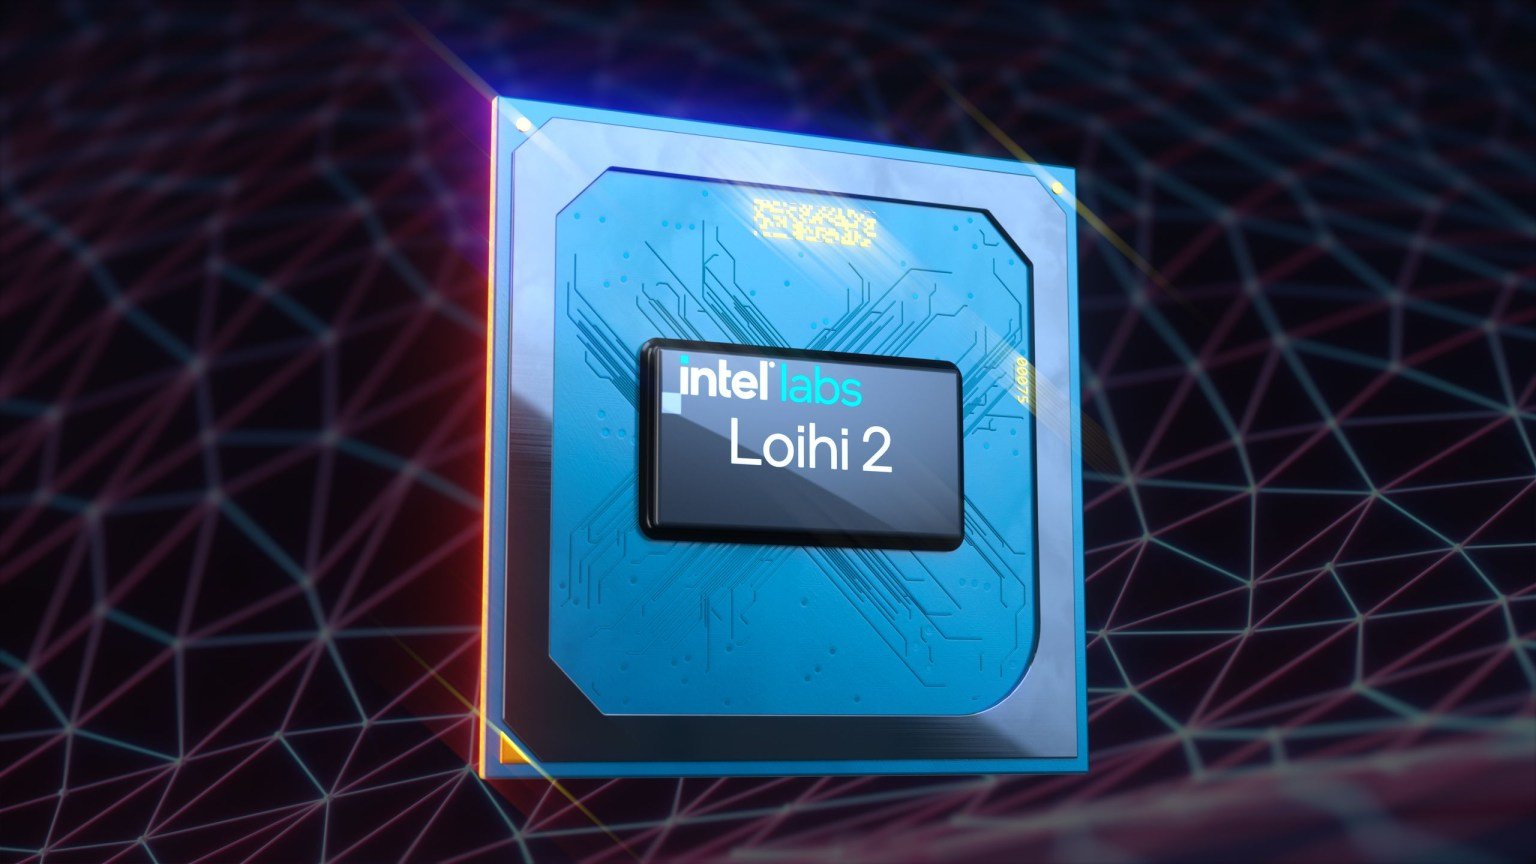 Intel unveils new Loihi 2 processor